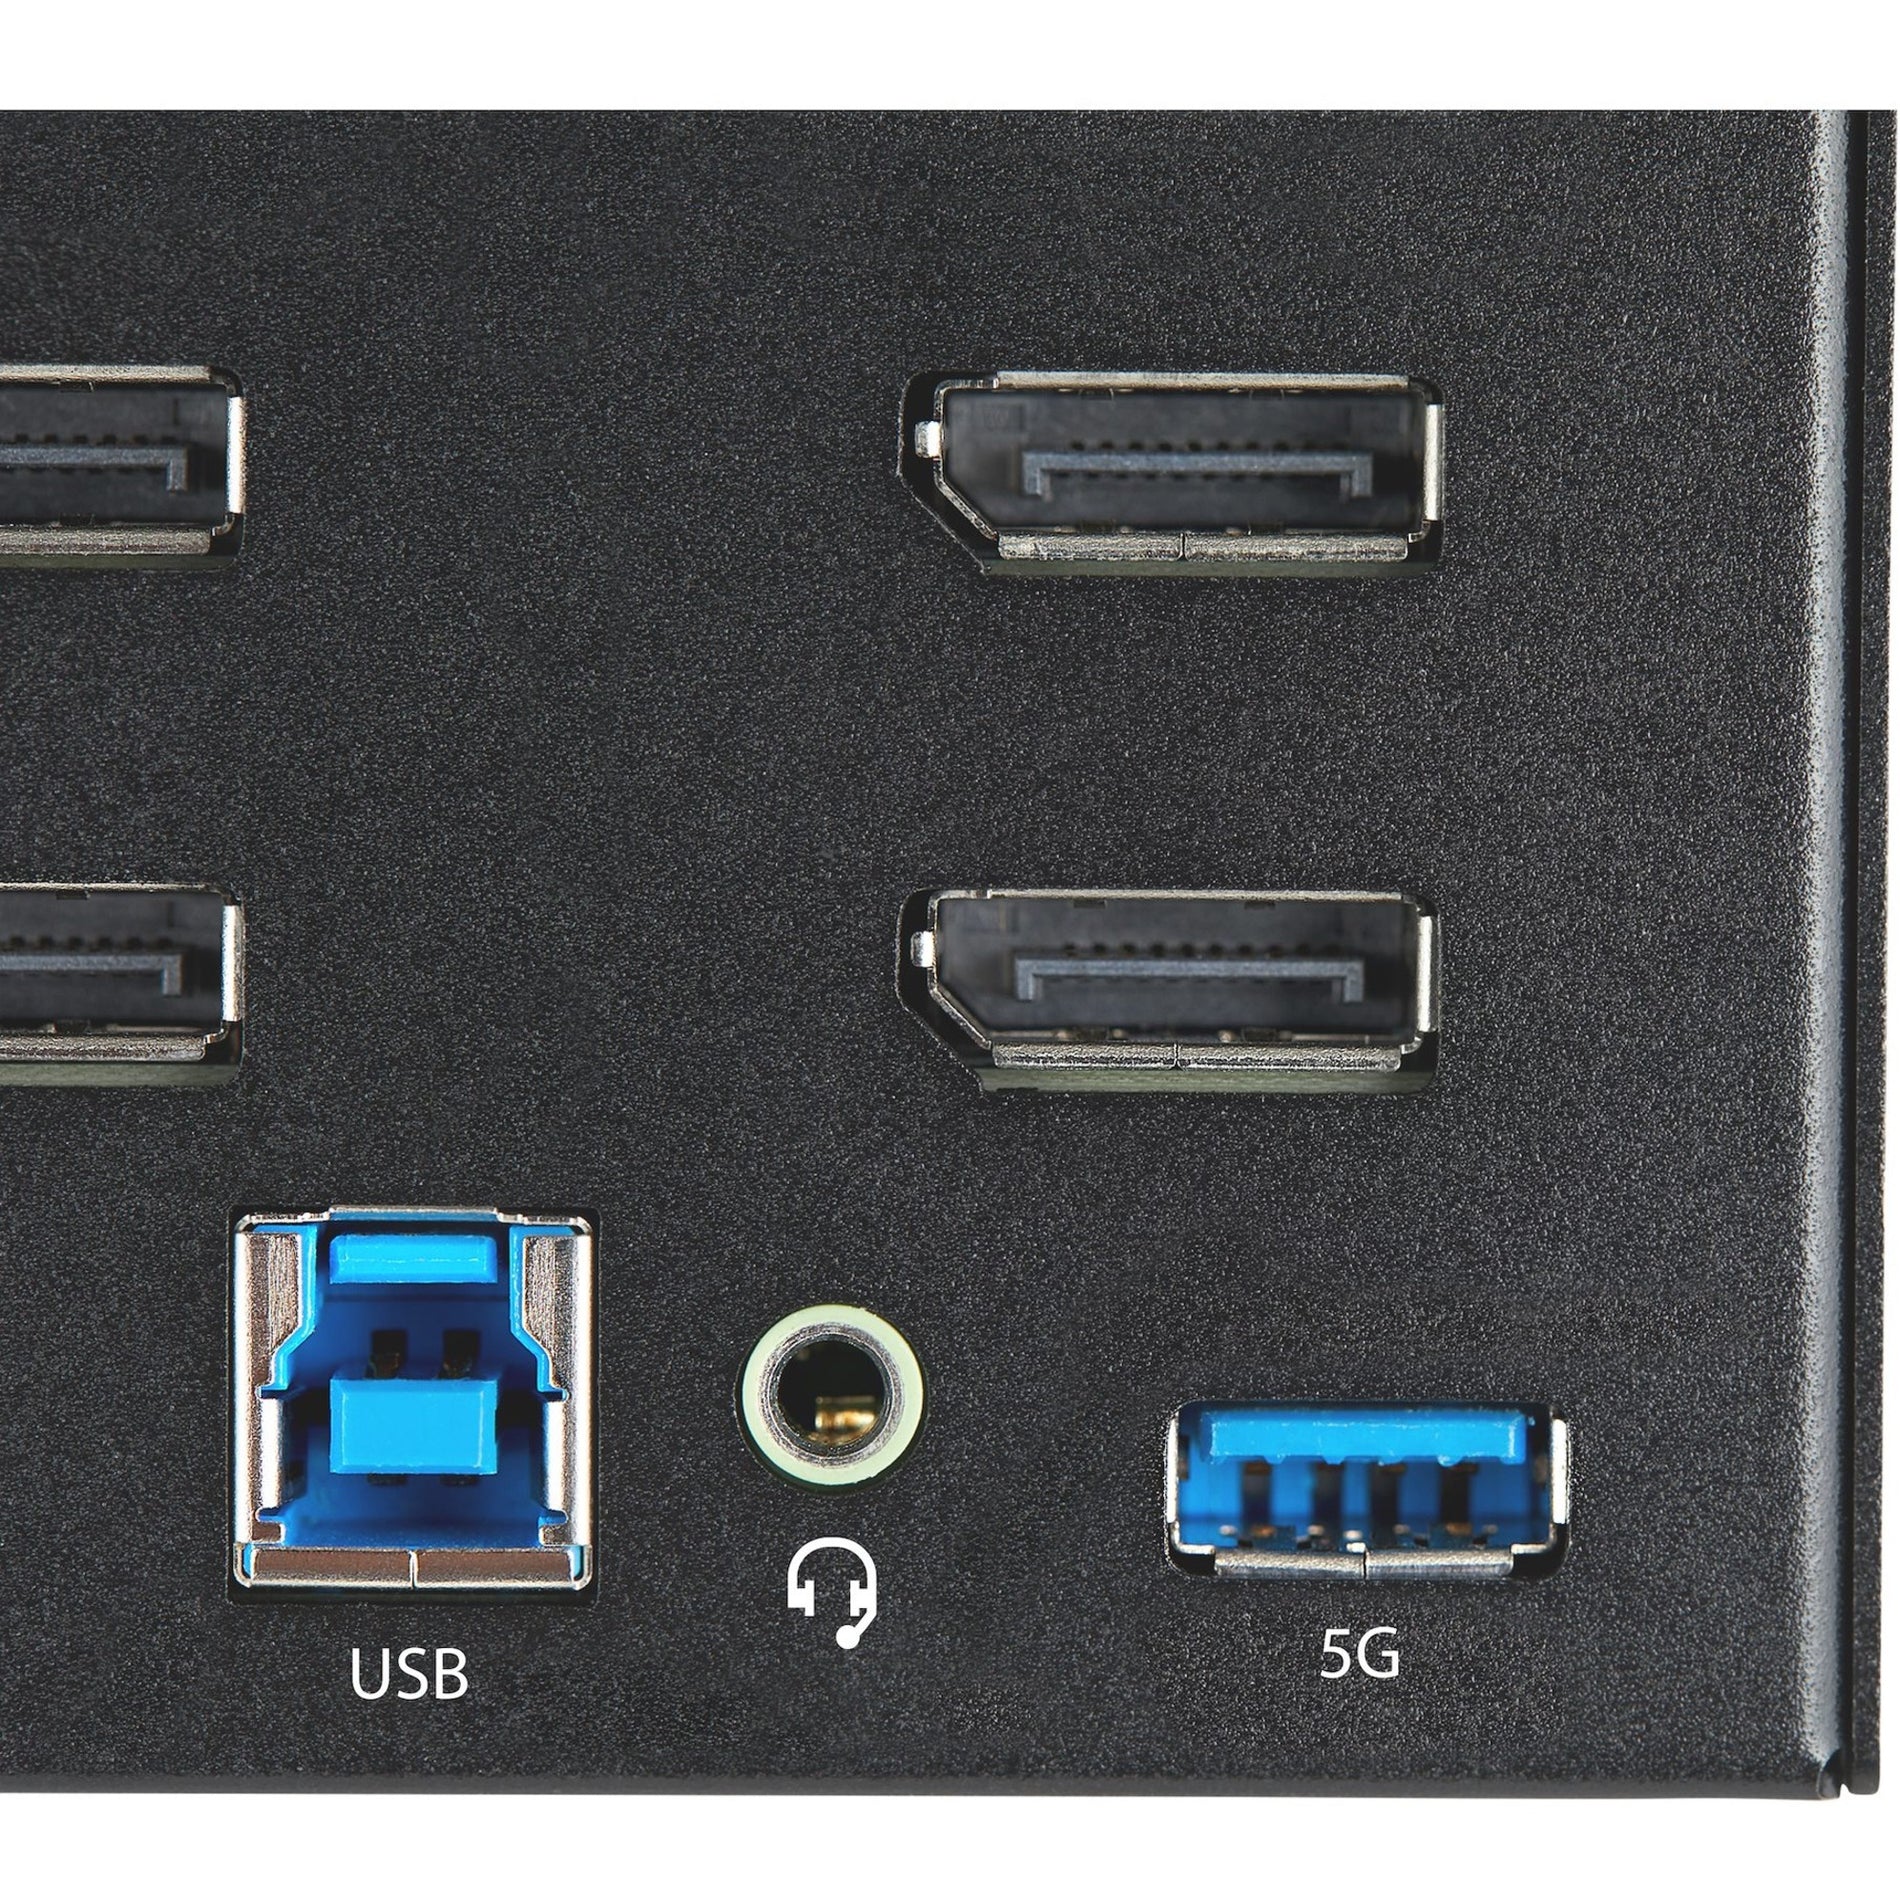 StarTech.com SV231QDPU34K 2 Port Quad Monitor DisplayPort KVM Switch 4K 60Hz UHD HDR, DP 1.2 KVM Switch, 2 Port USB 3.0 Hub, 4x USB HID, Audio, Hotkey